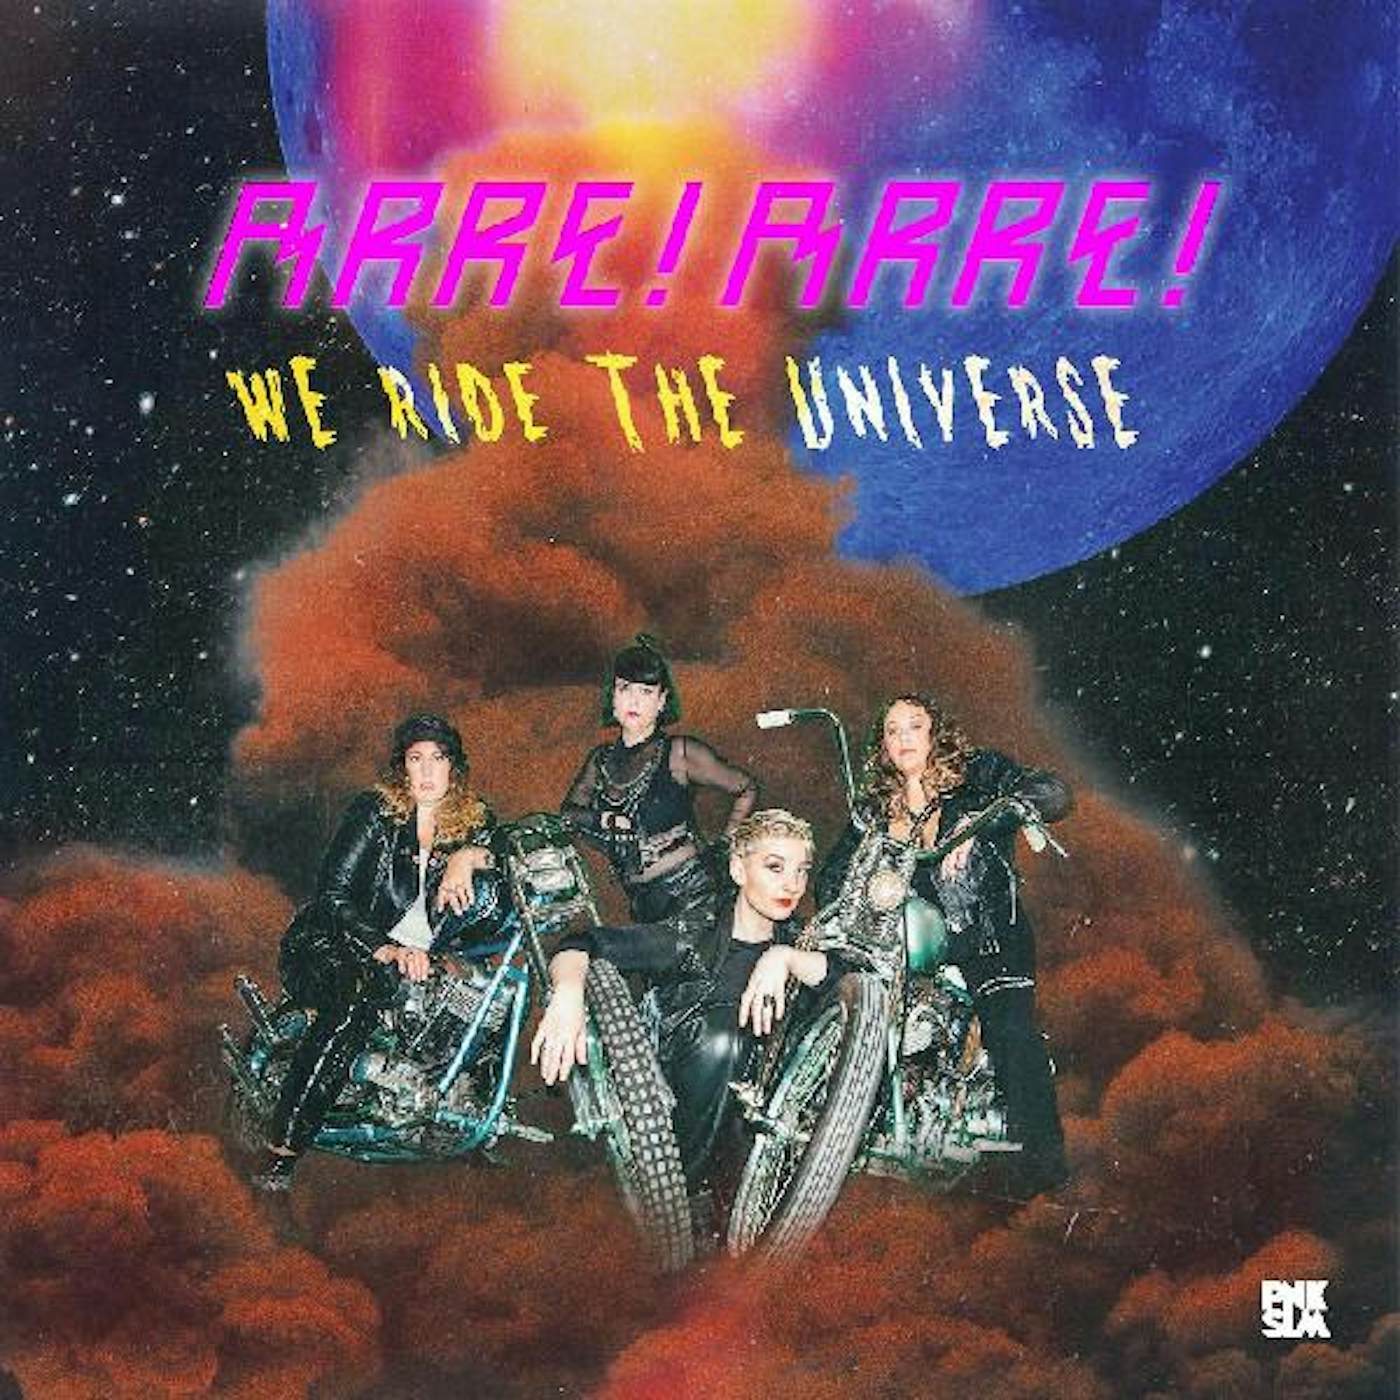 Arre! Arre! We Ride the Universe Vinyl Record